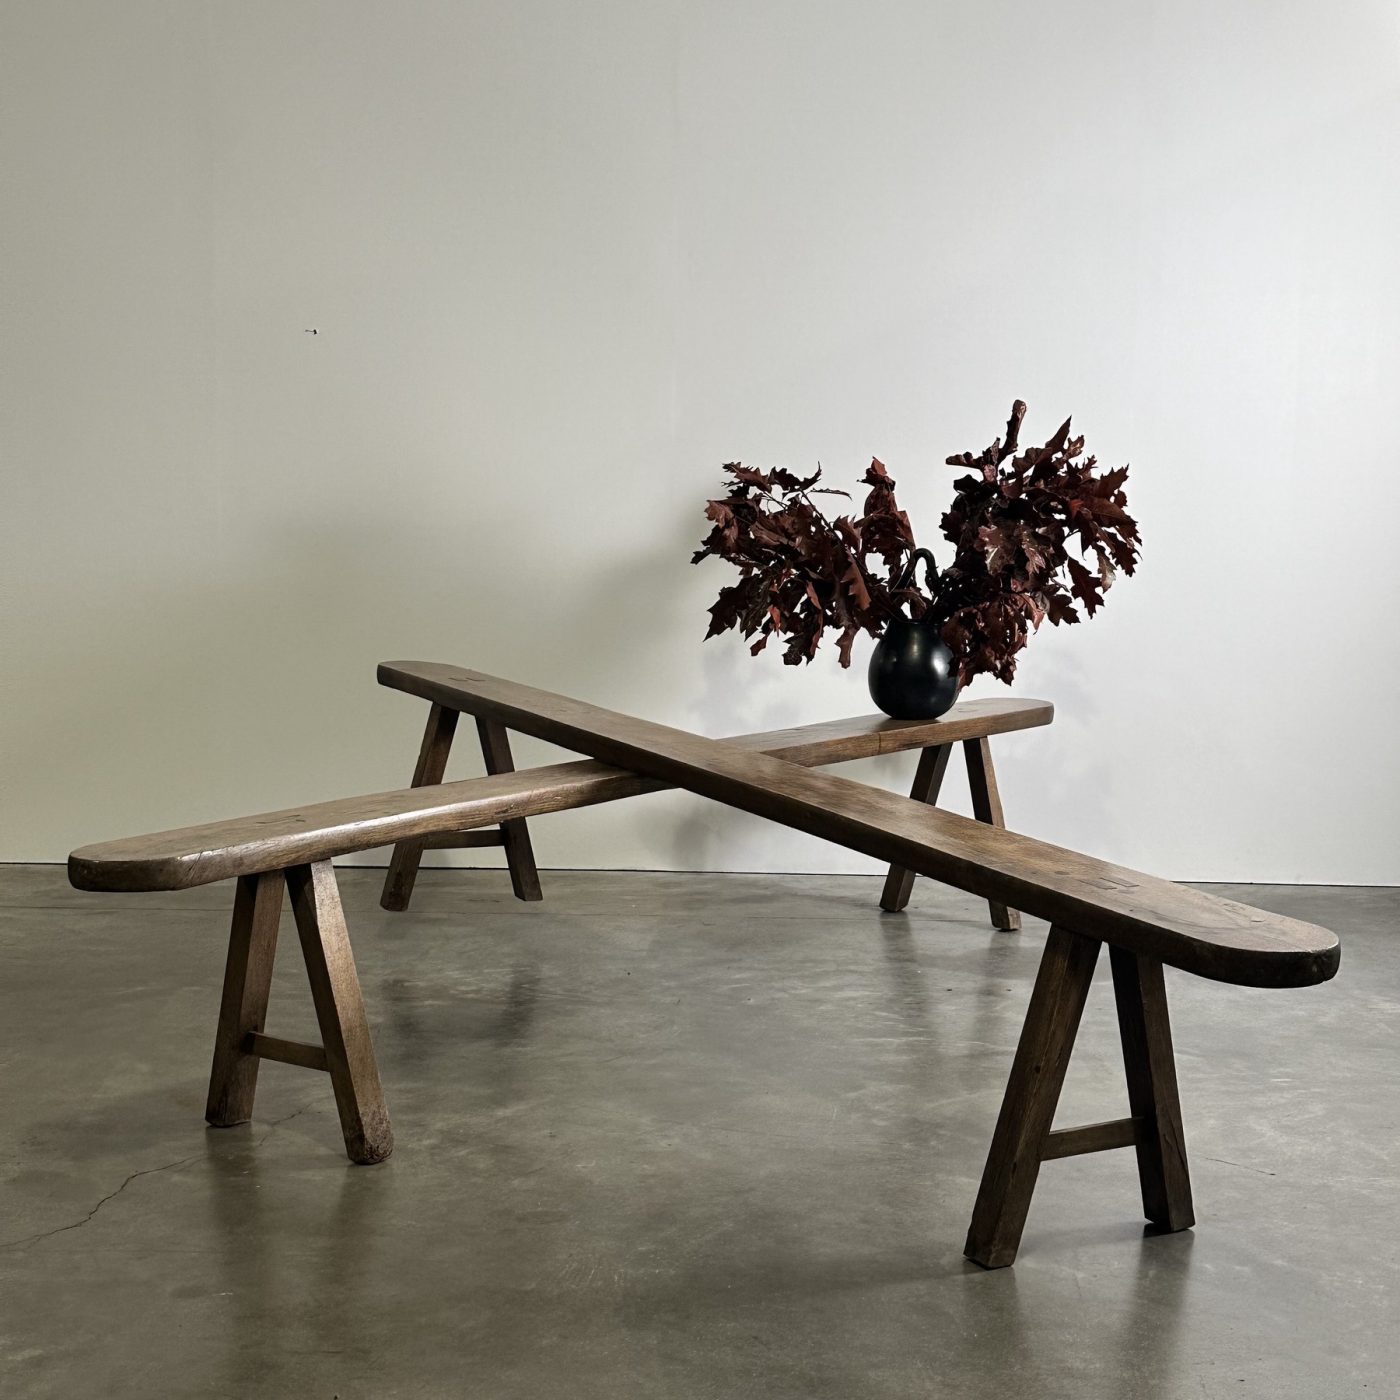 objet-vagabond-oak-bench0006